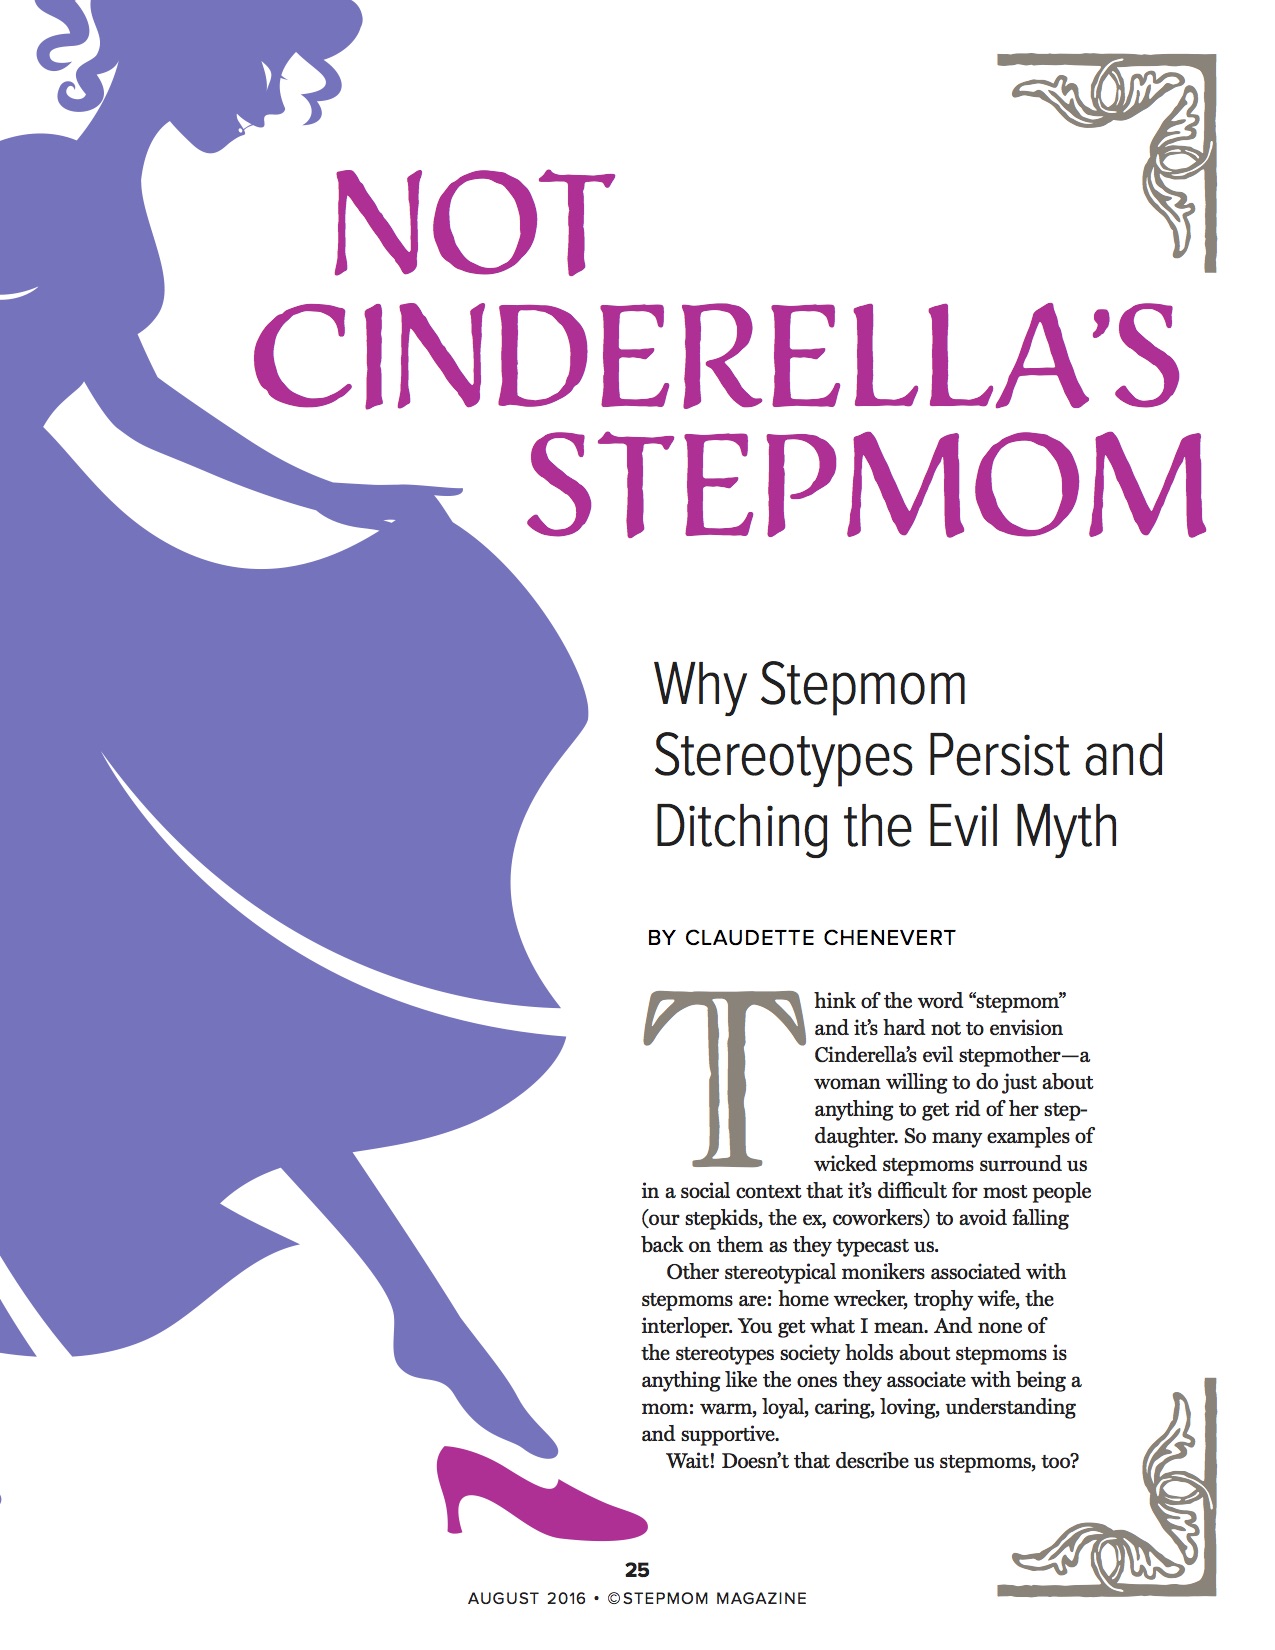 Stepmom Stereotypes: Inside the August 2016 Issue - StepMom Magazine